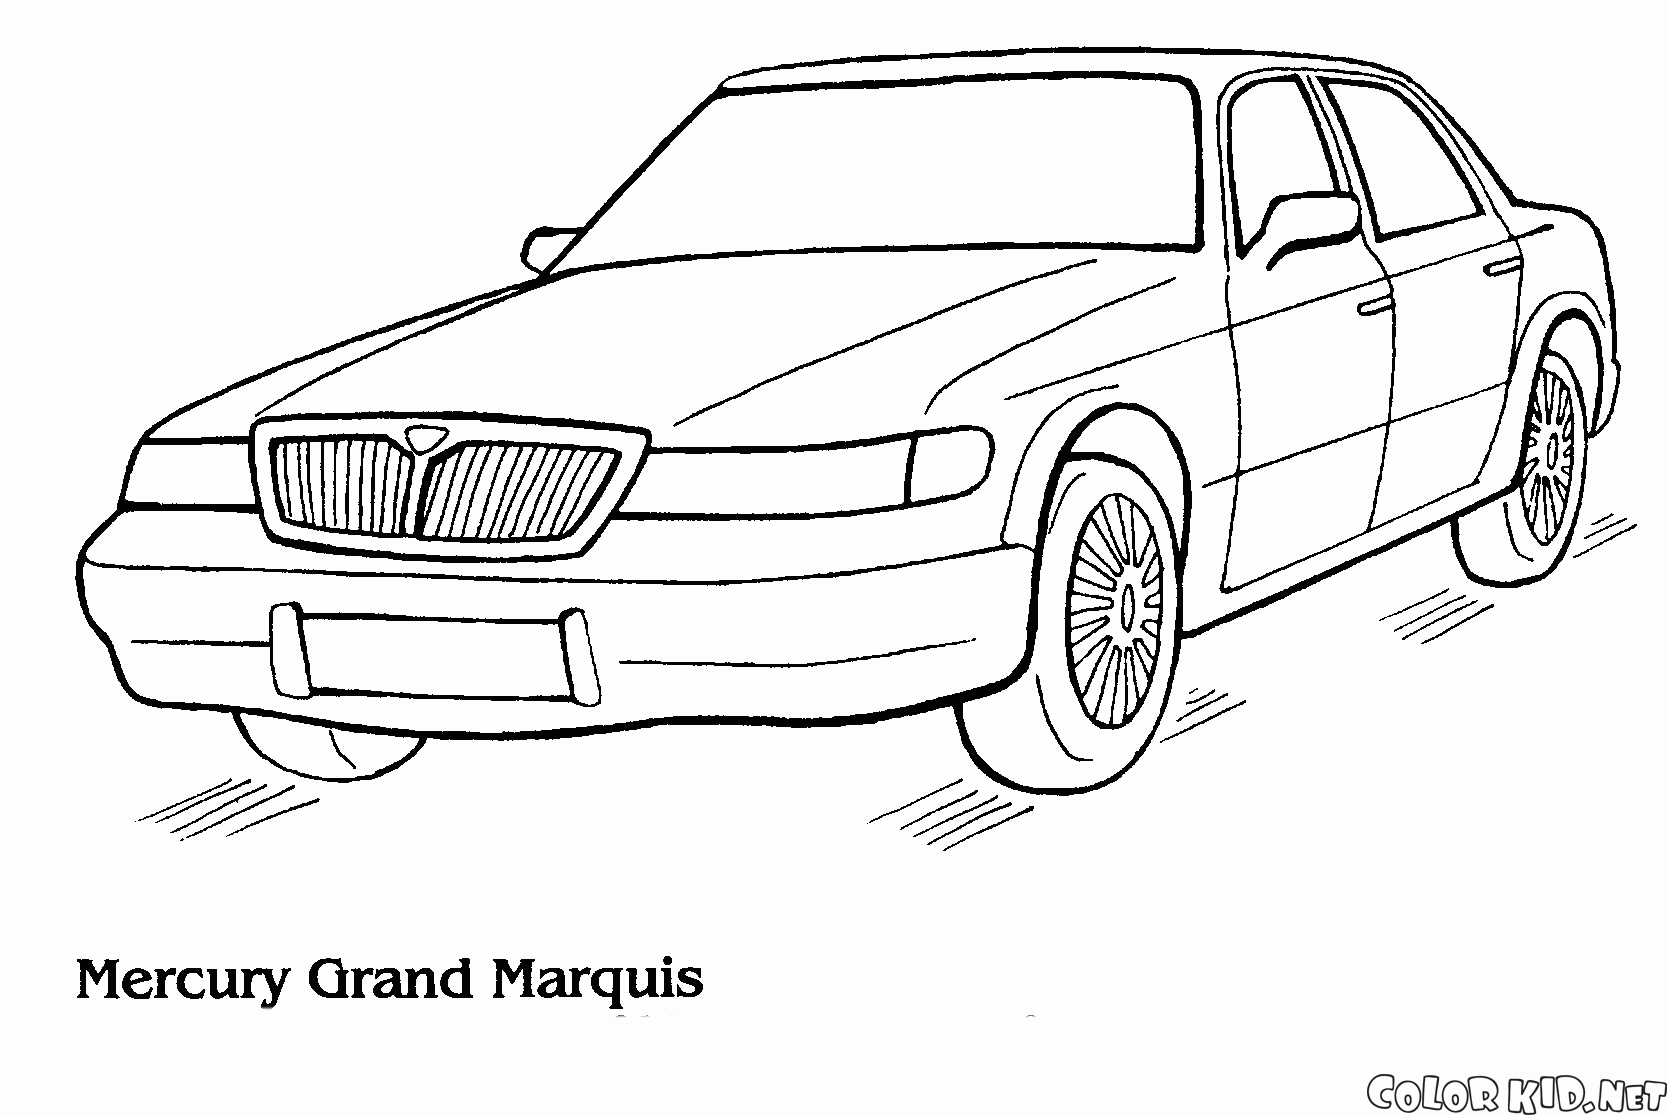 Mercury Grand